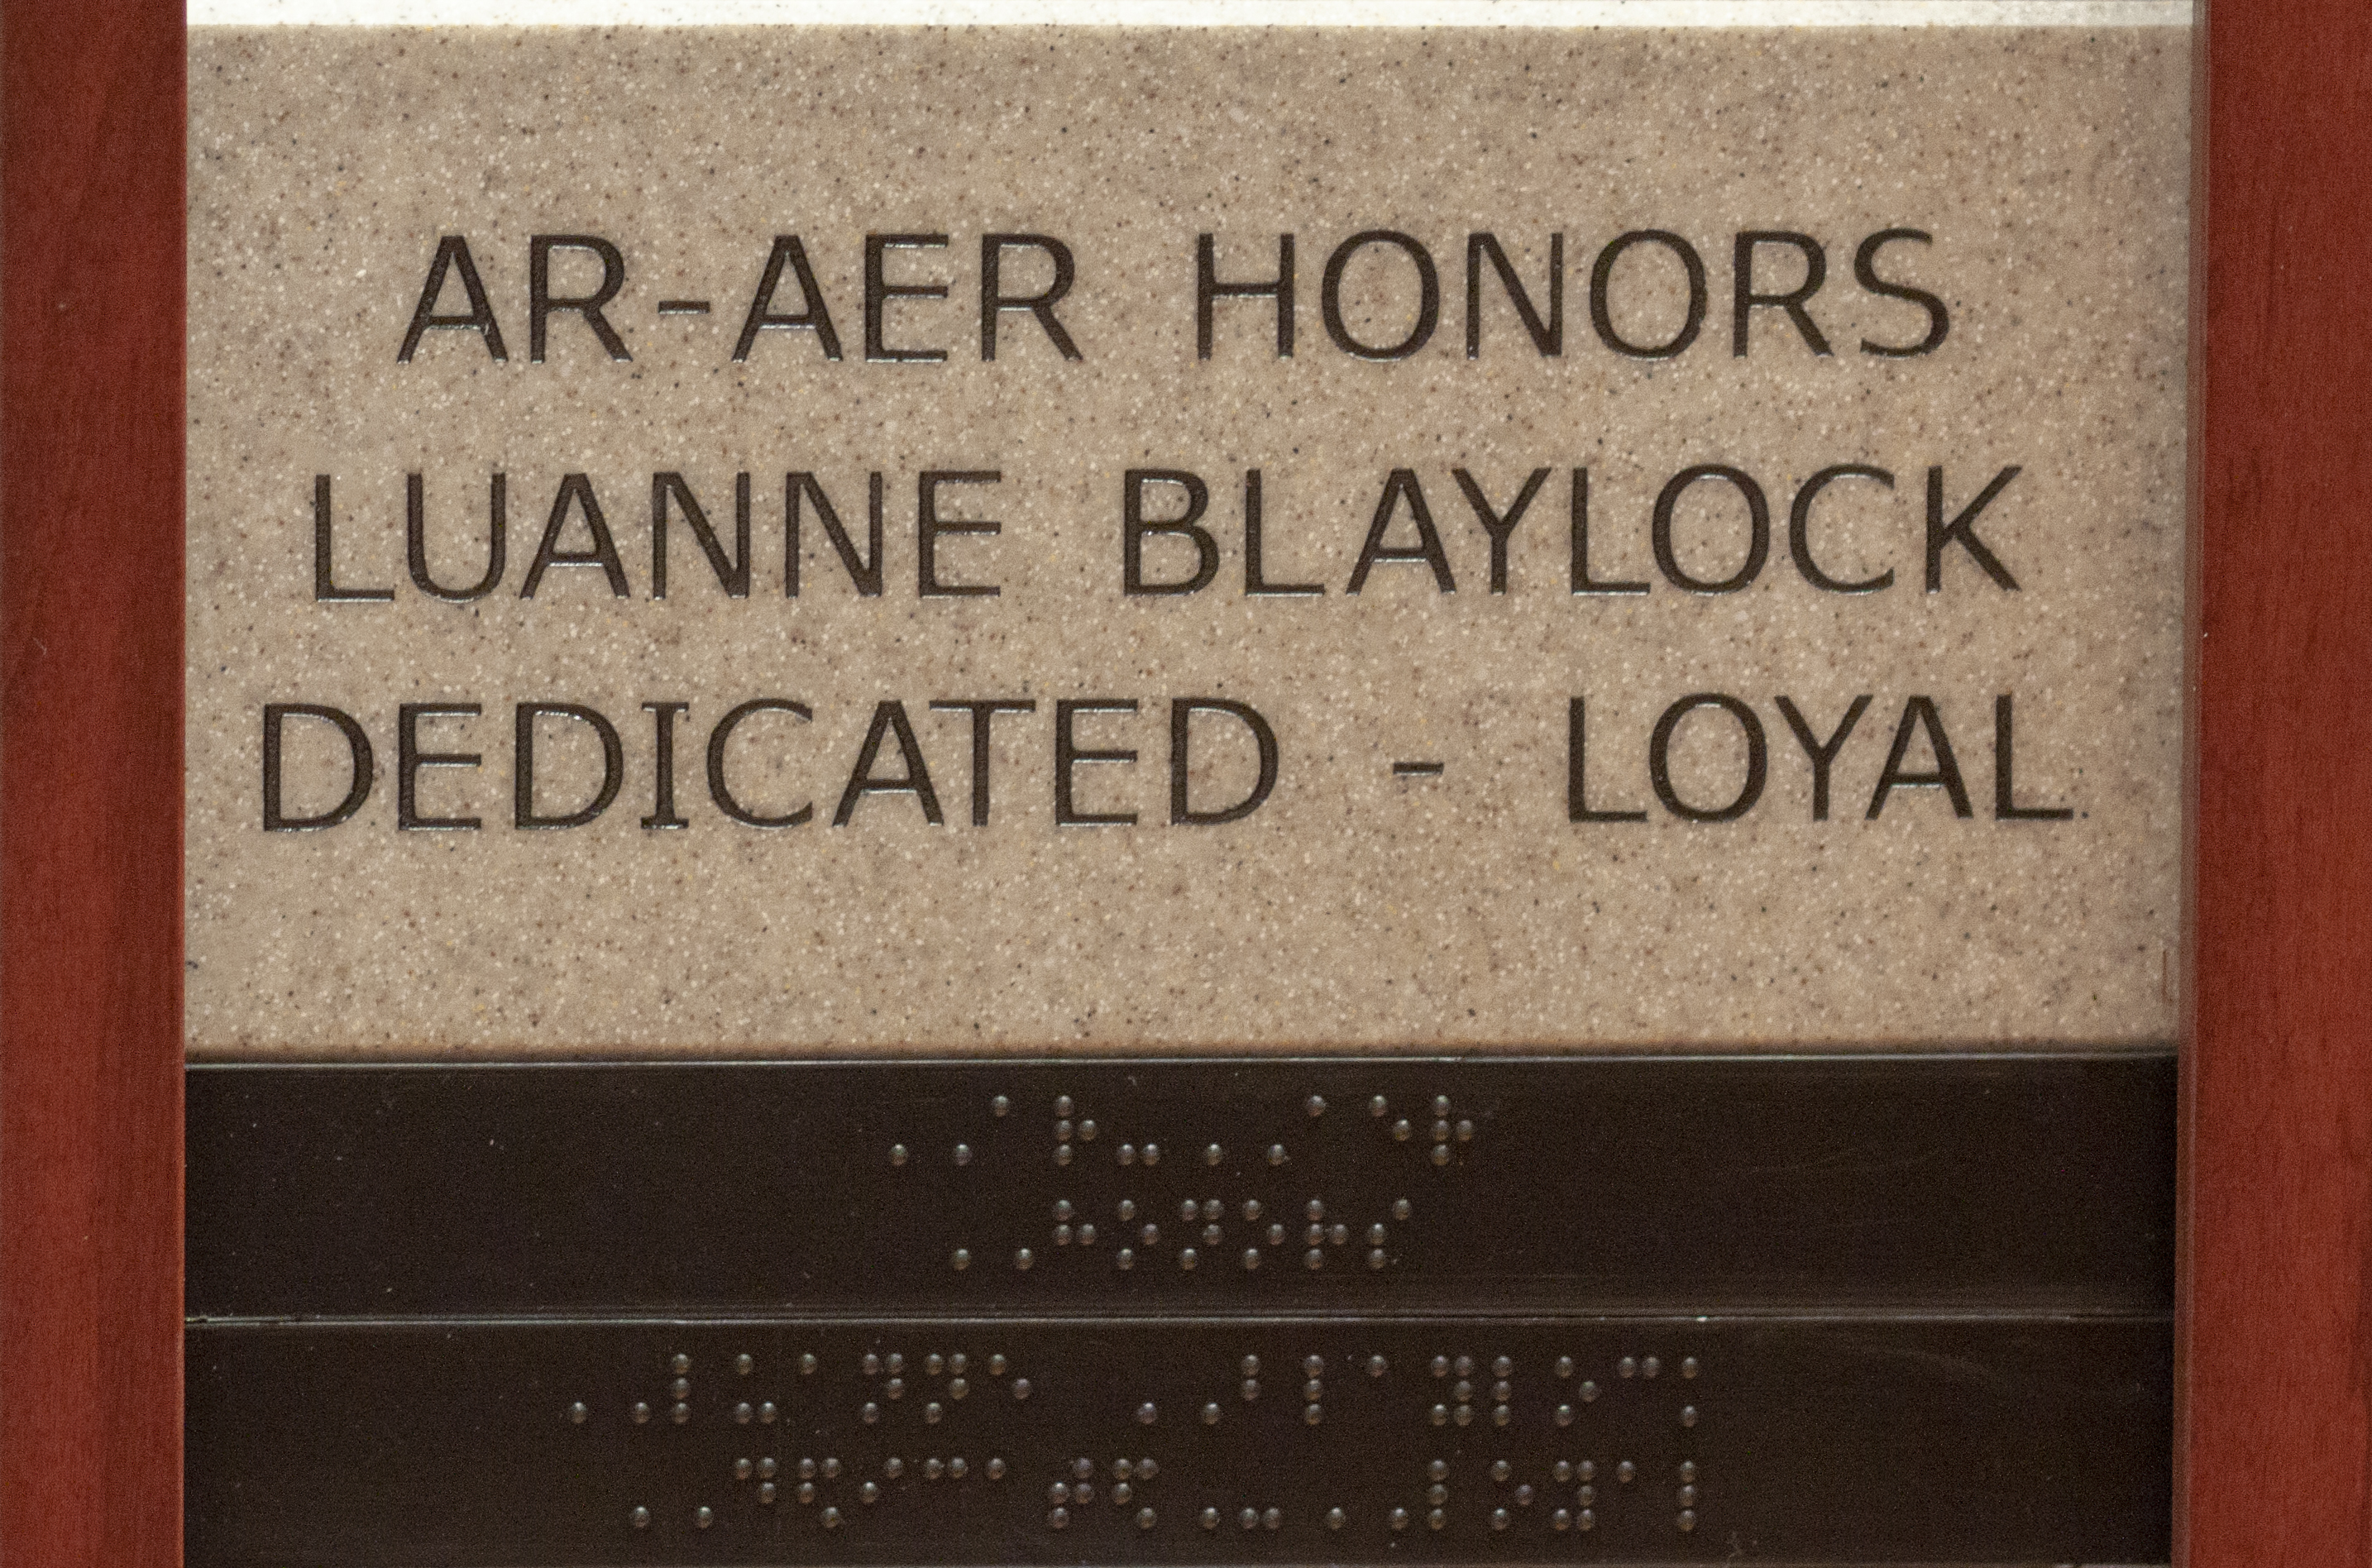 AR-AER Honors Luanne Blaylock Dedicated - Loyal